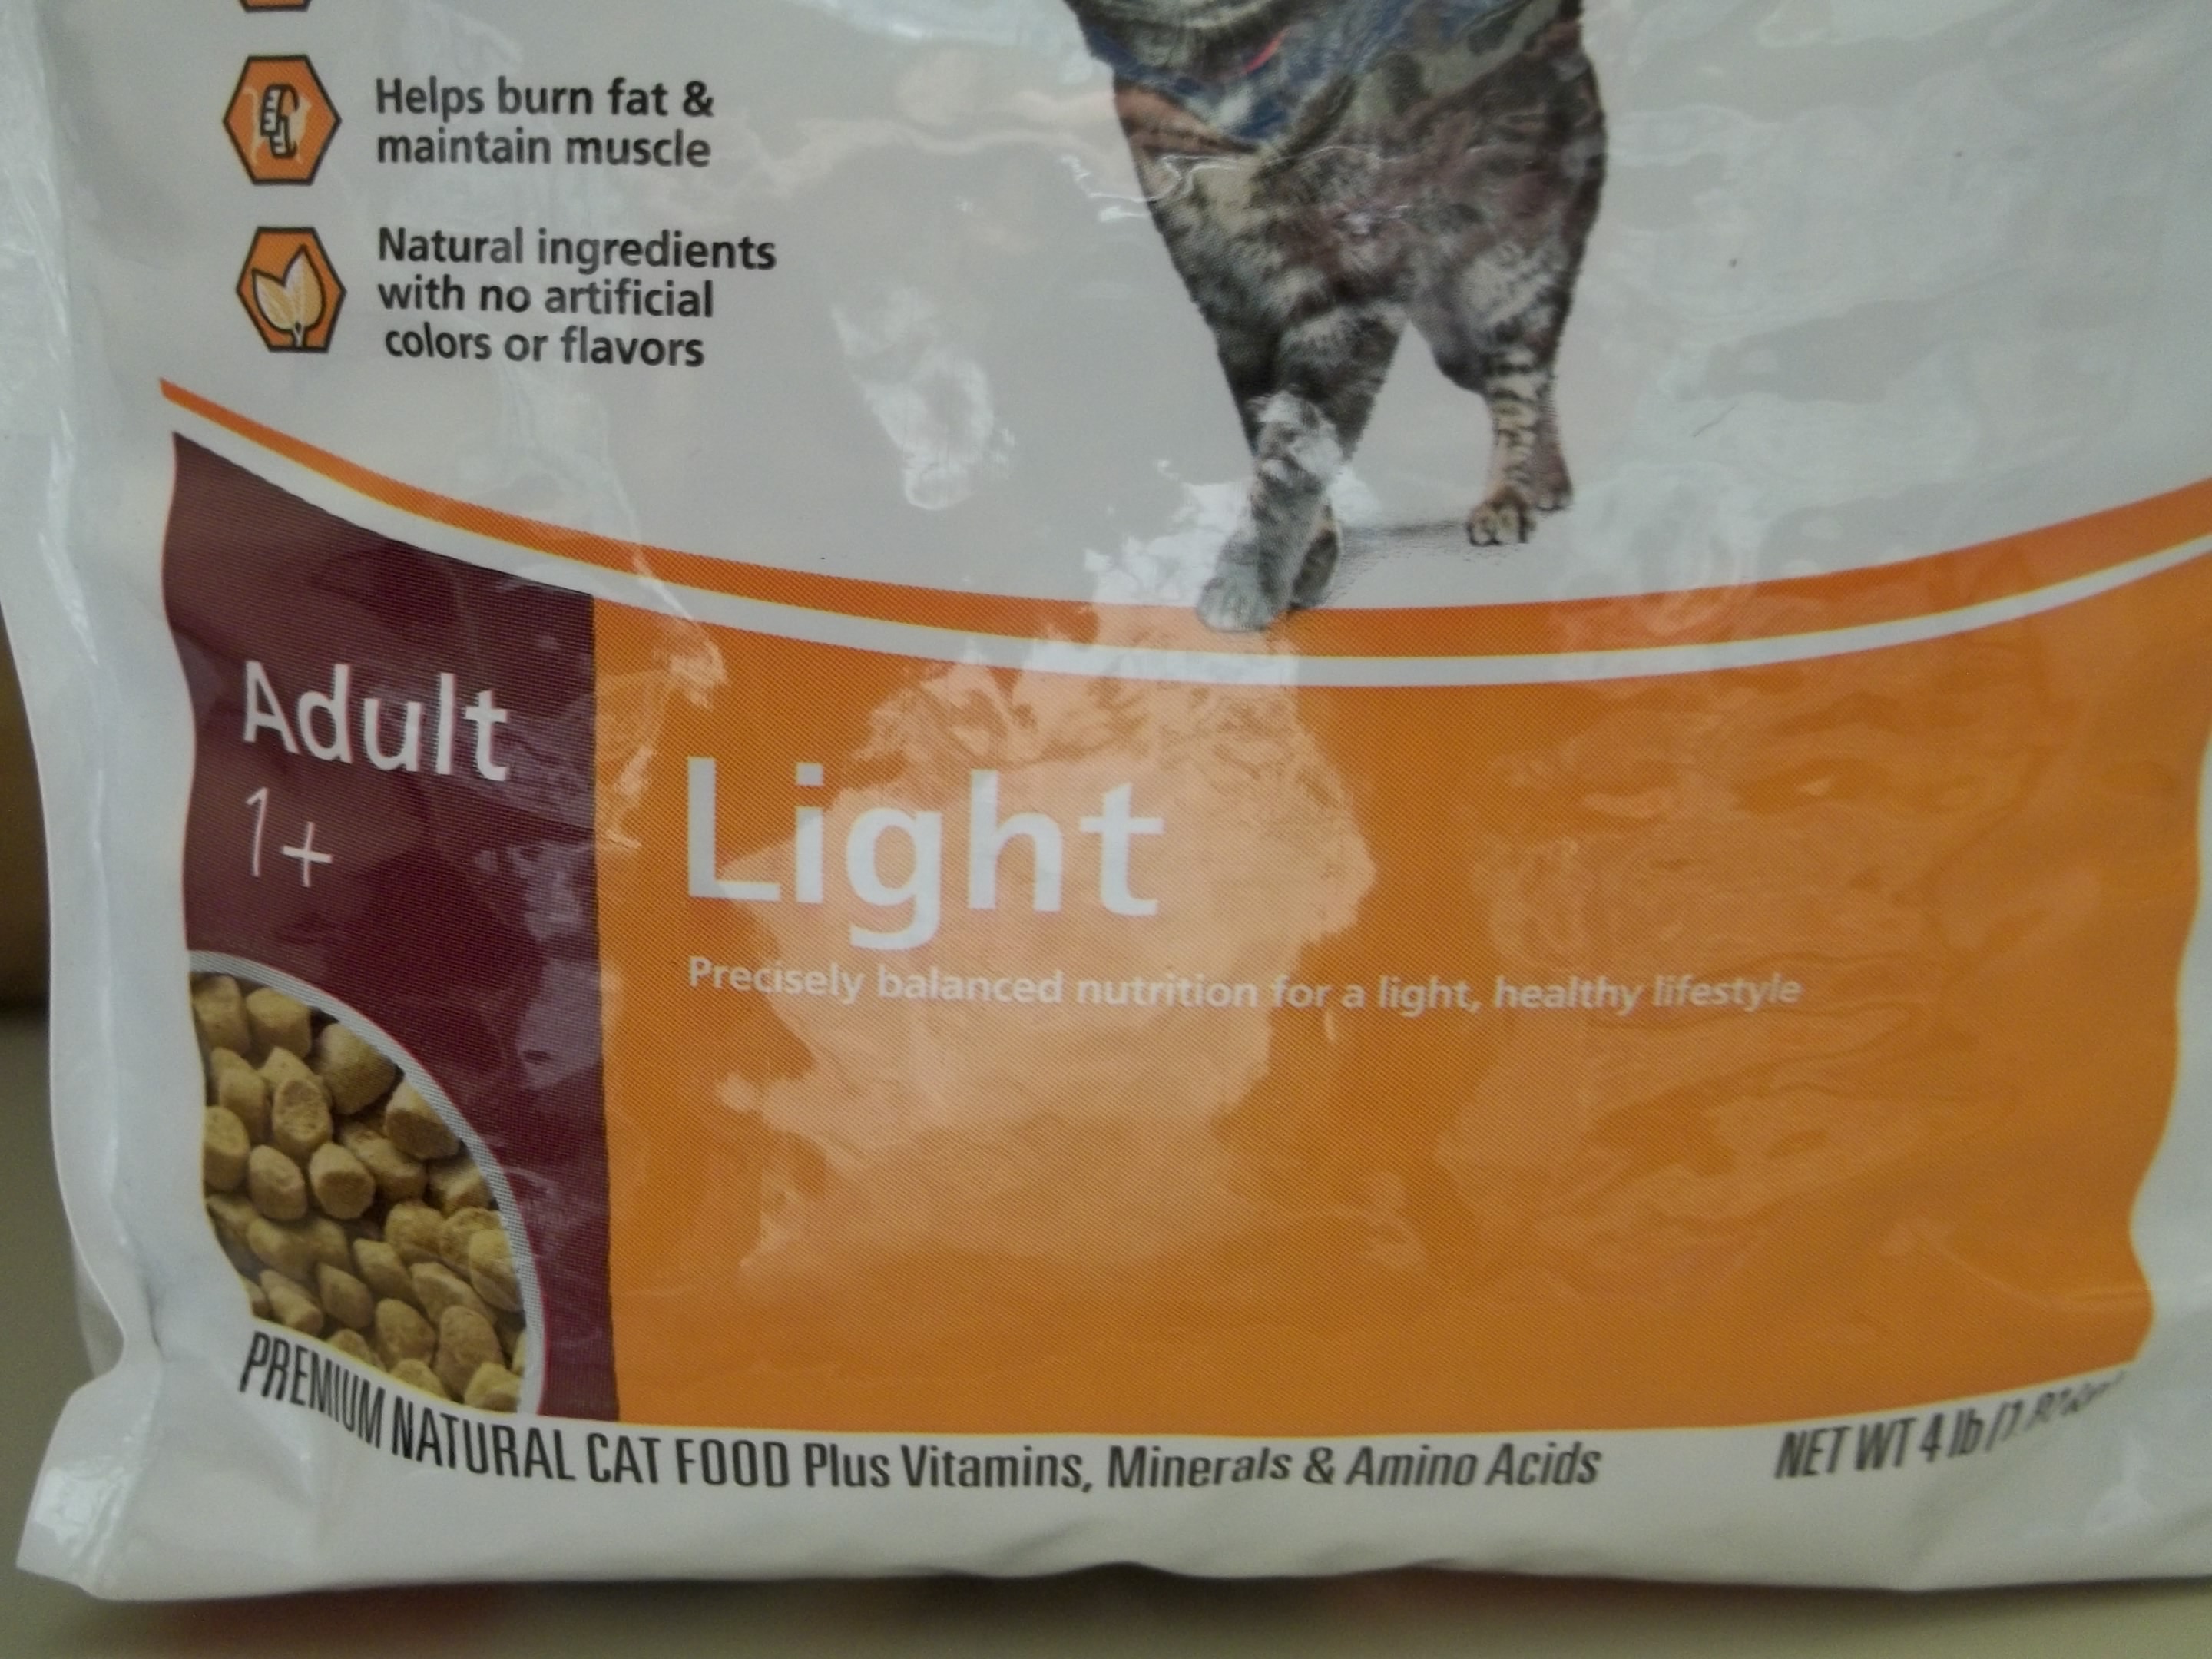 aafco tested dog food brands